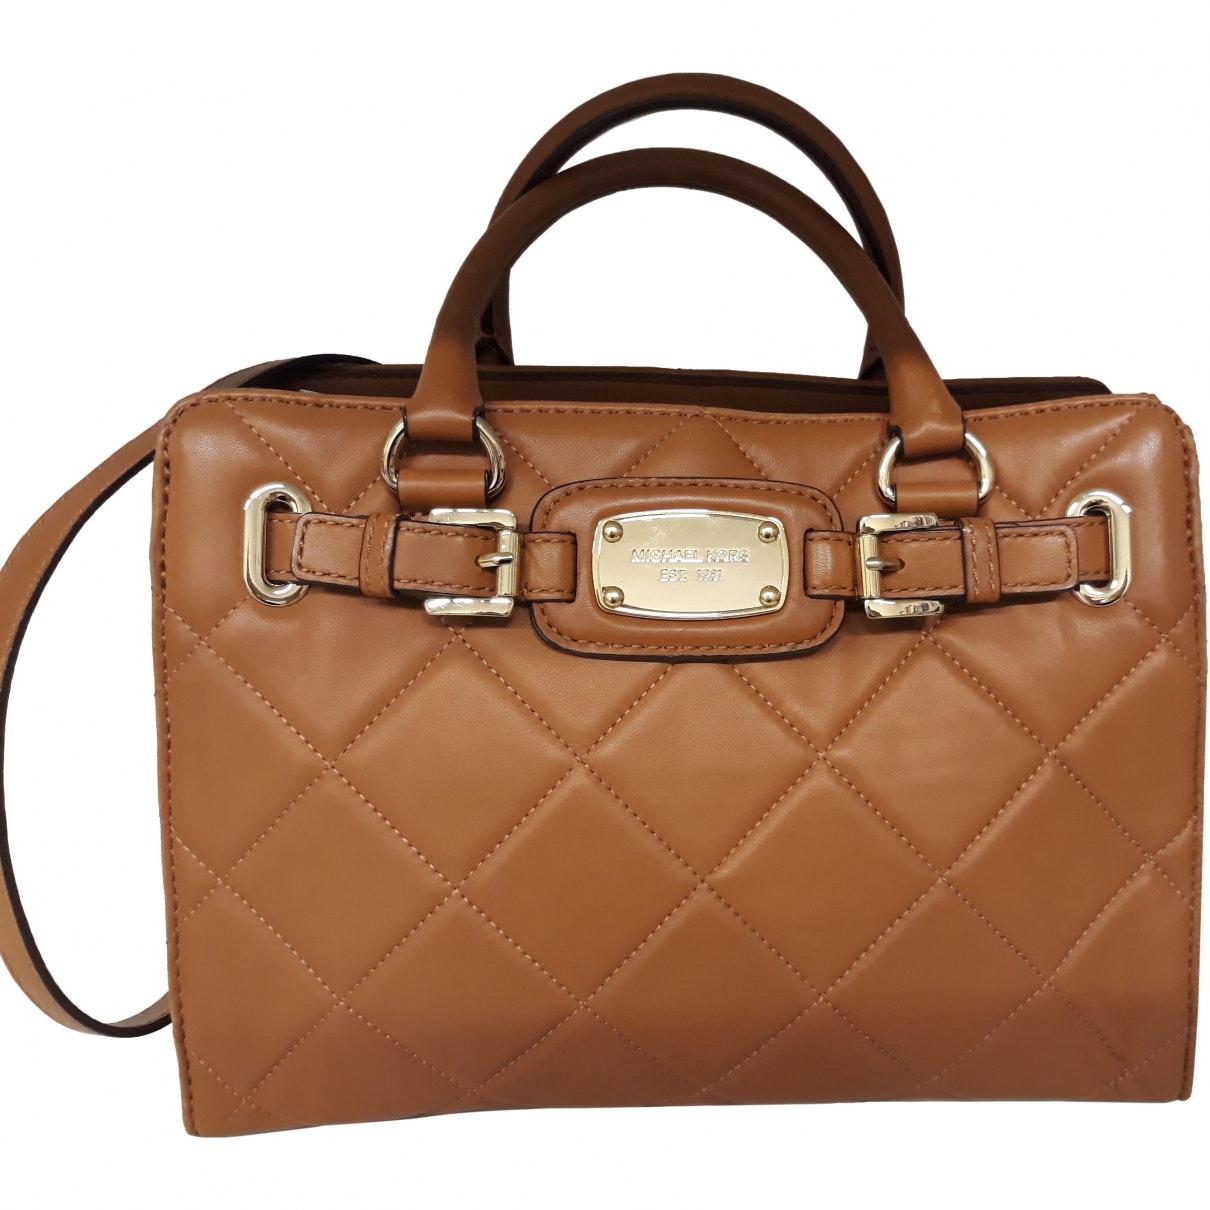 Michael Kors Camel Leather Handbag in Brown - Lyst